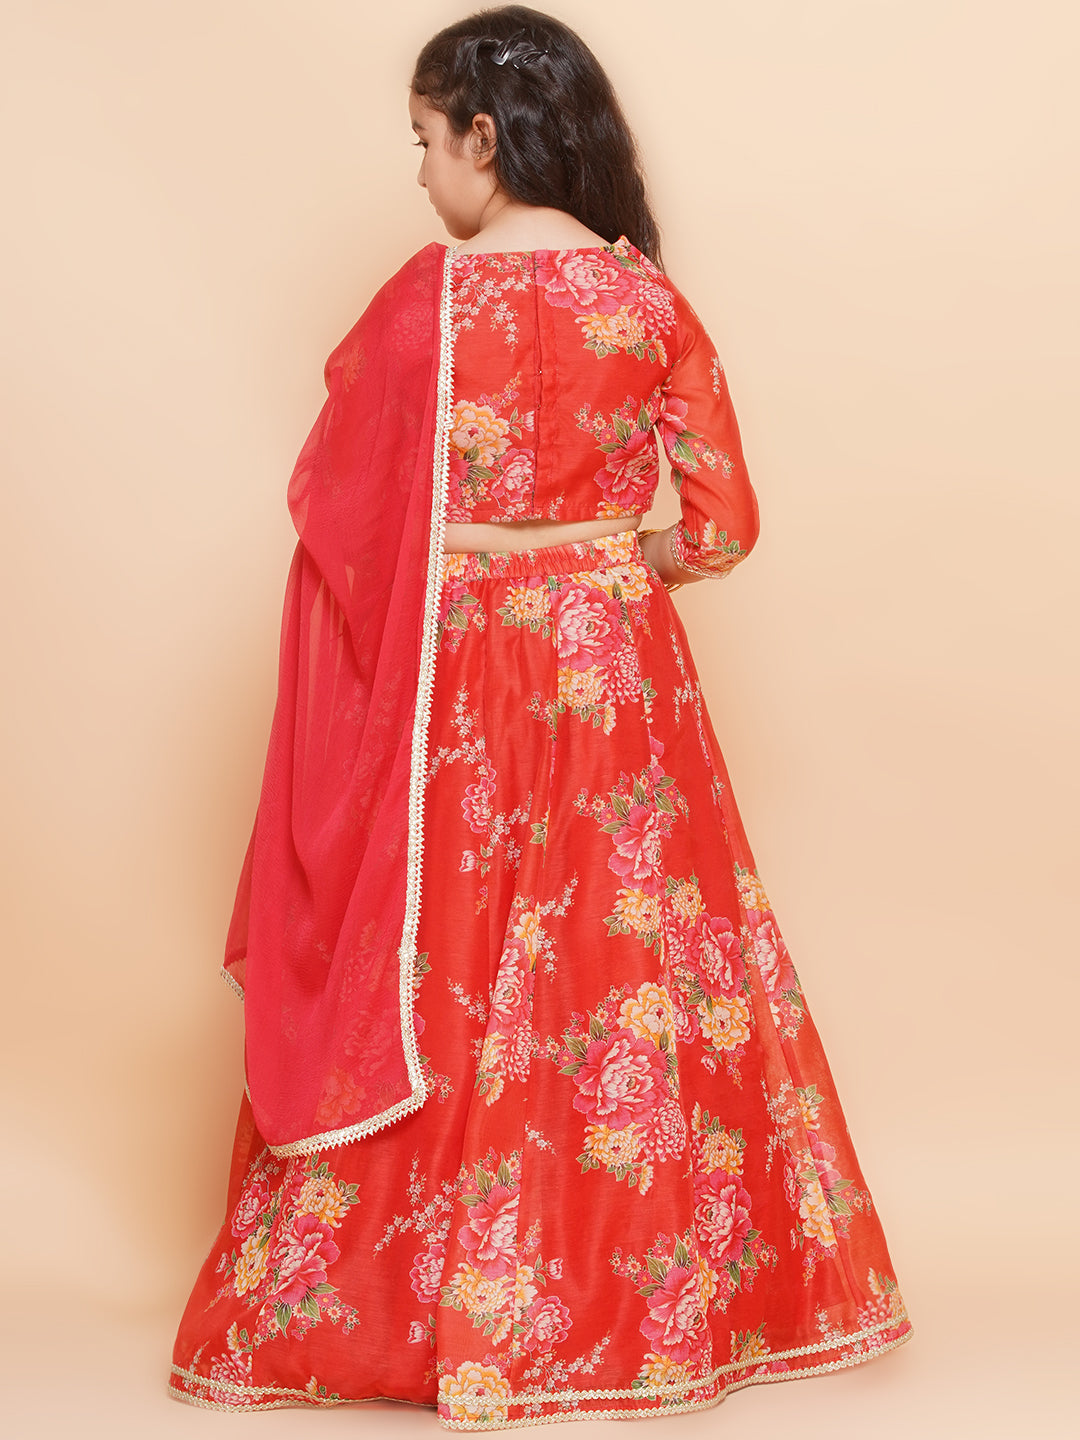 Girls Red & Green Digital Flower Print Lace work Choli Lehenga with Dupatta